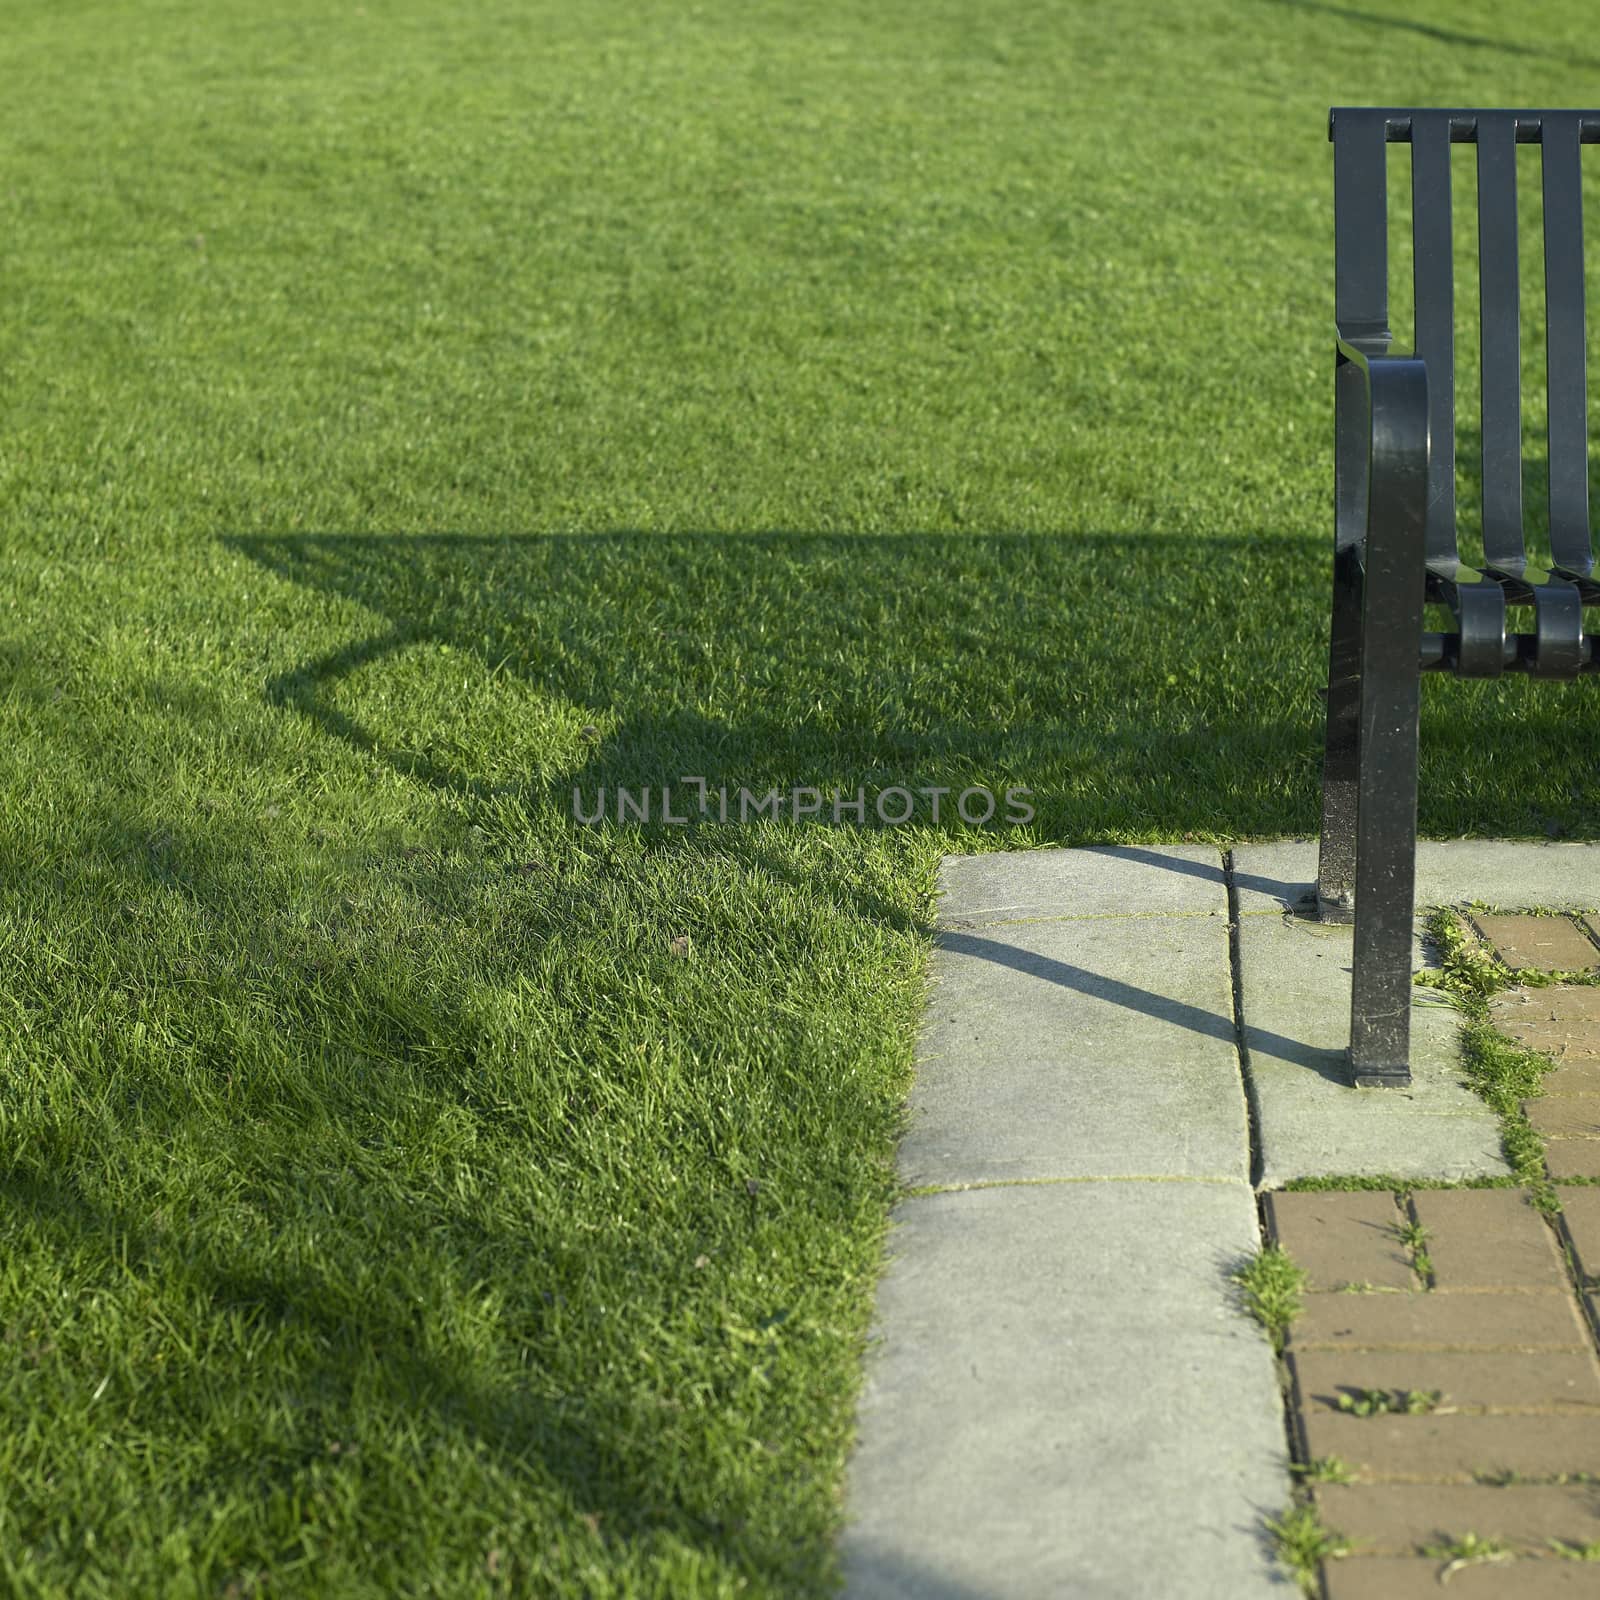 Black metal park bench near a brick path and perfect green grass